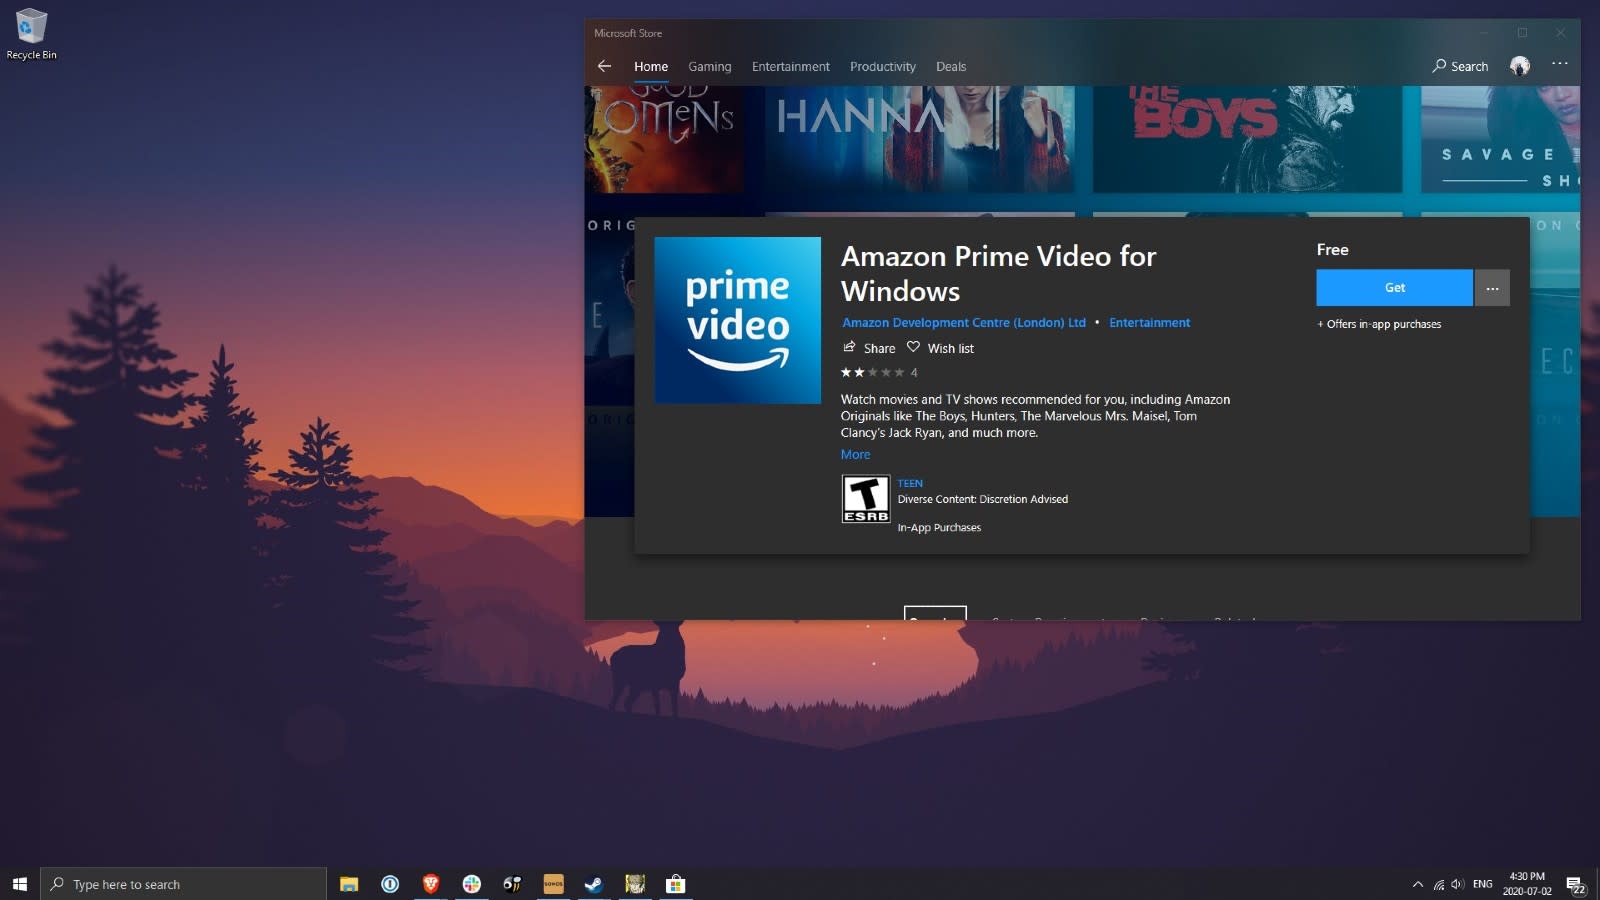 Amazon's Windows 10 Prime Video app brings offline viewing to PCs